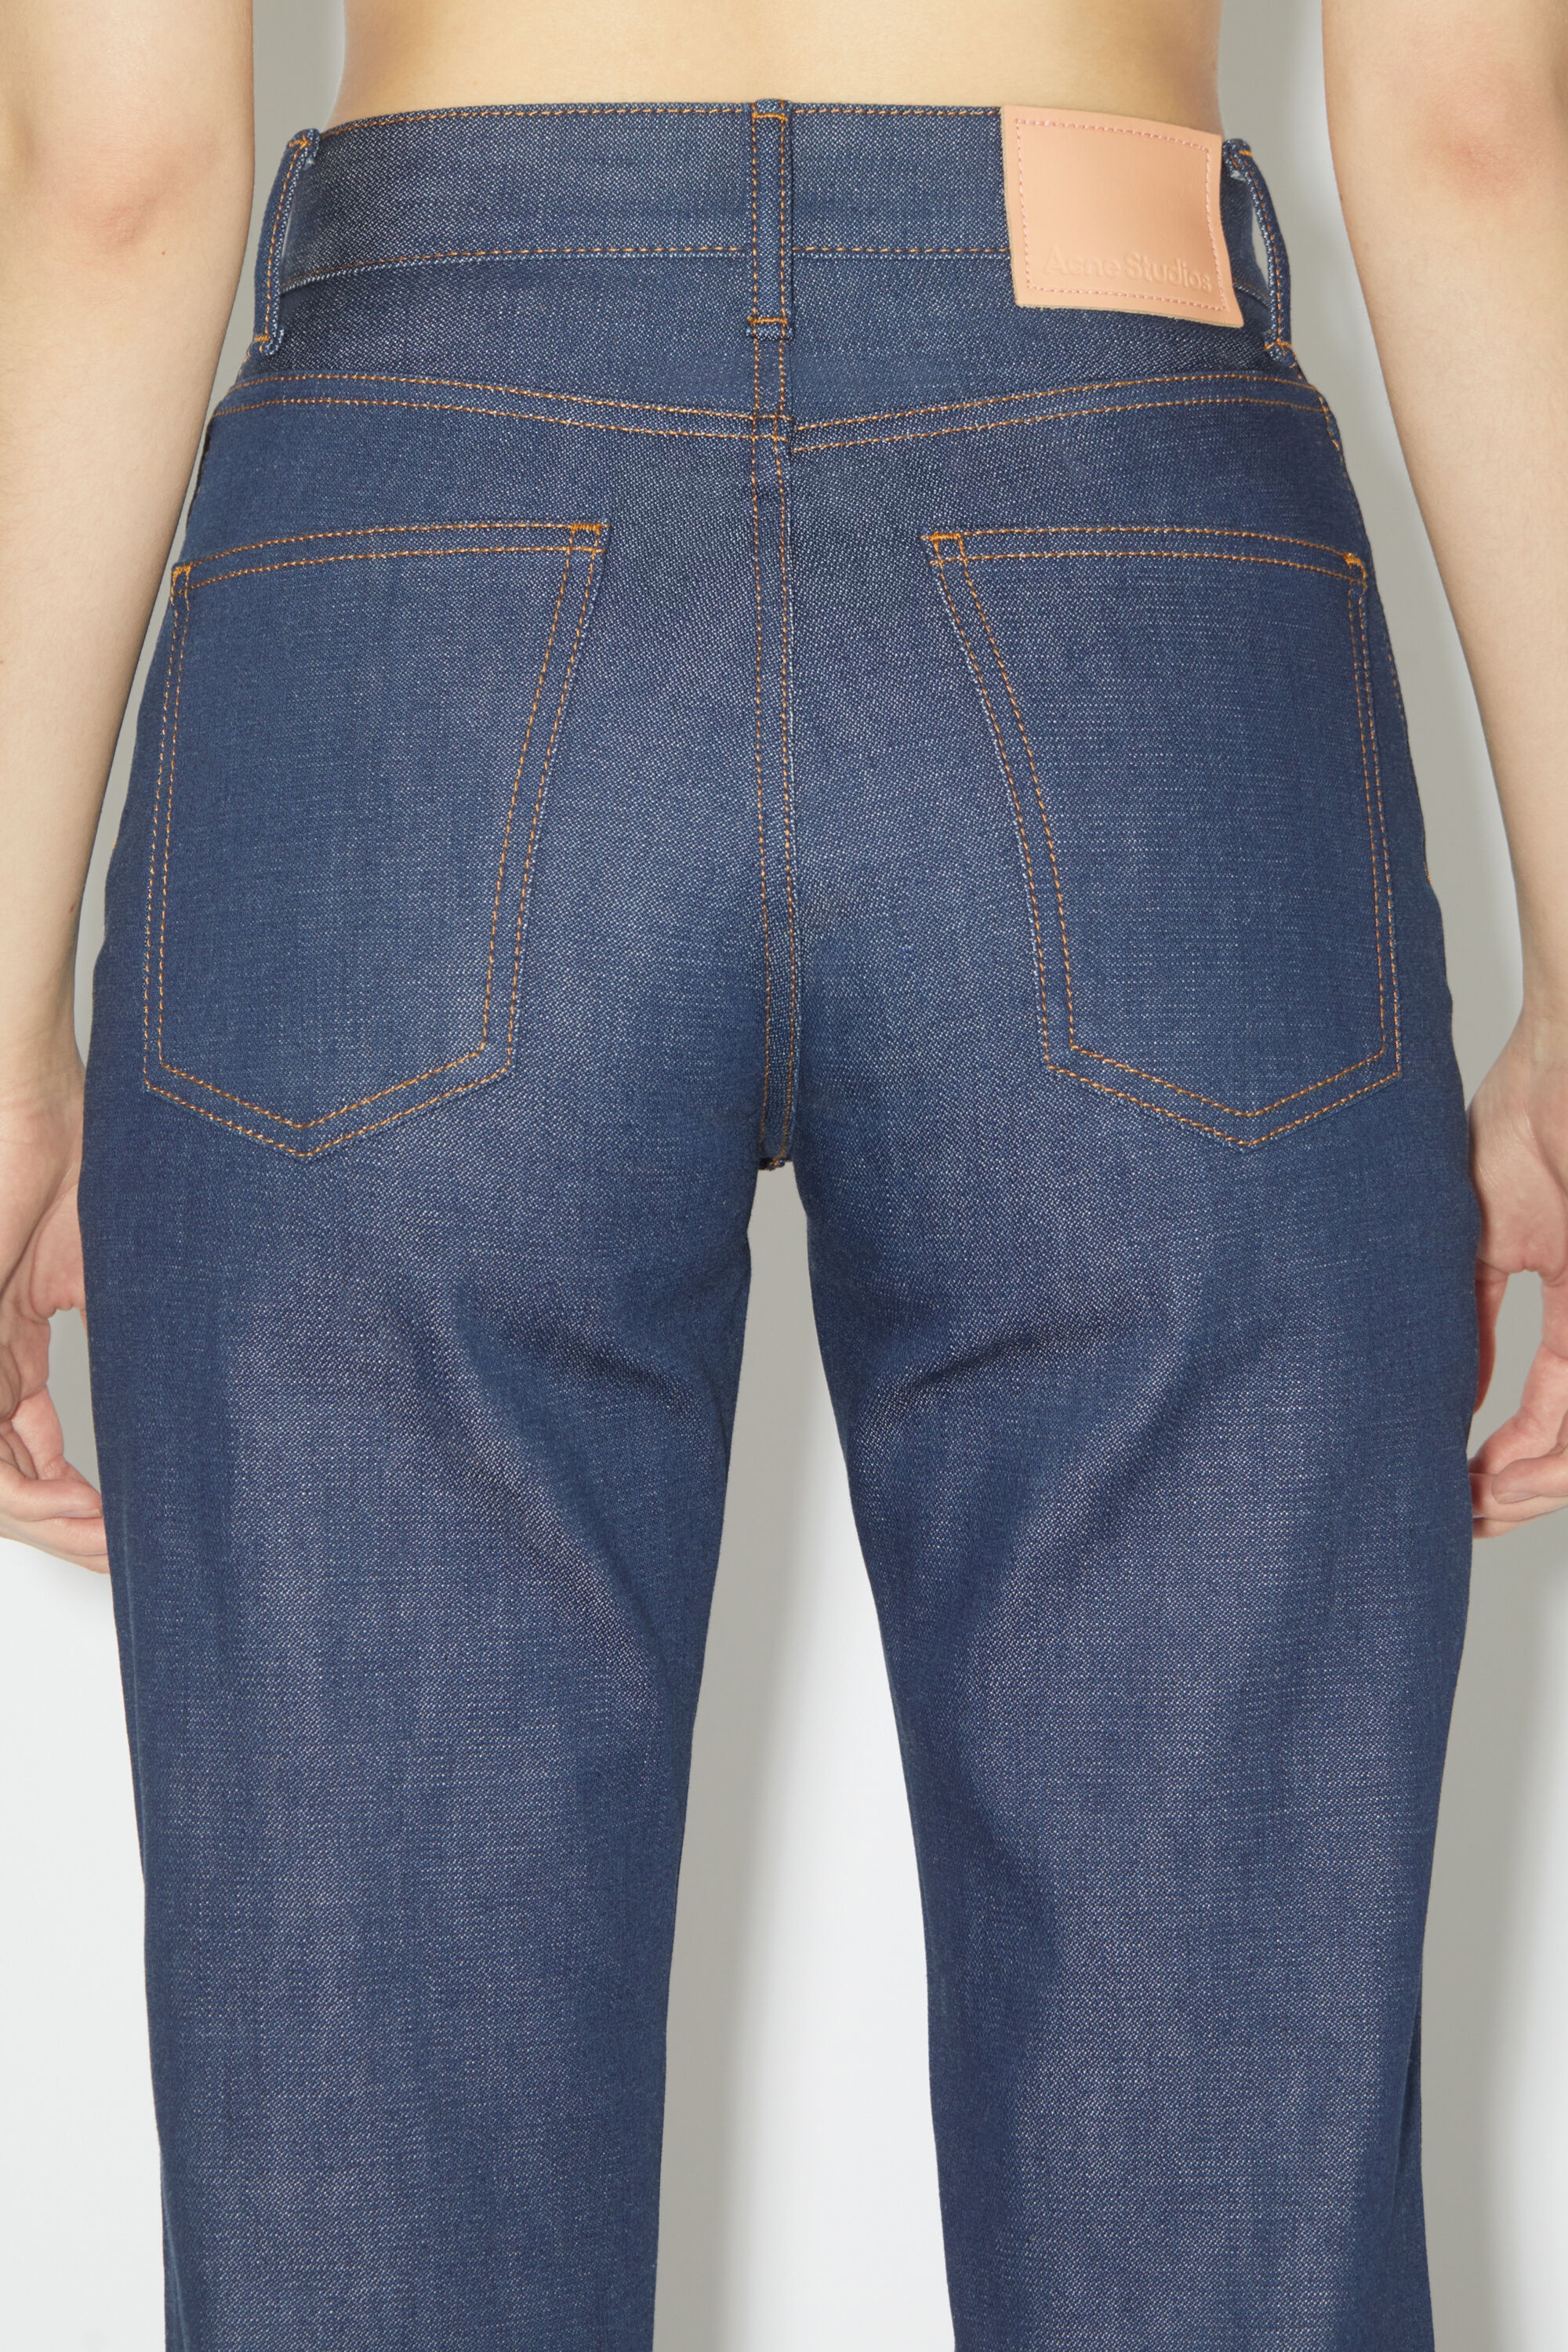 Regular fit jeans - 1977 - Indigo blue - 6